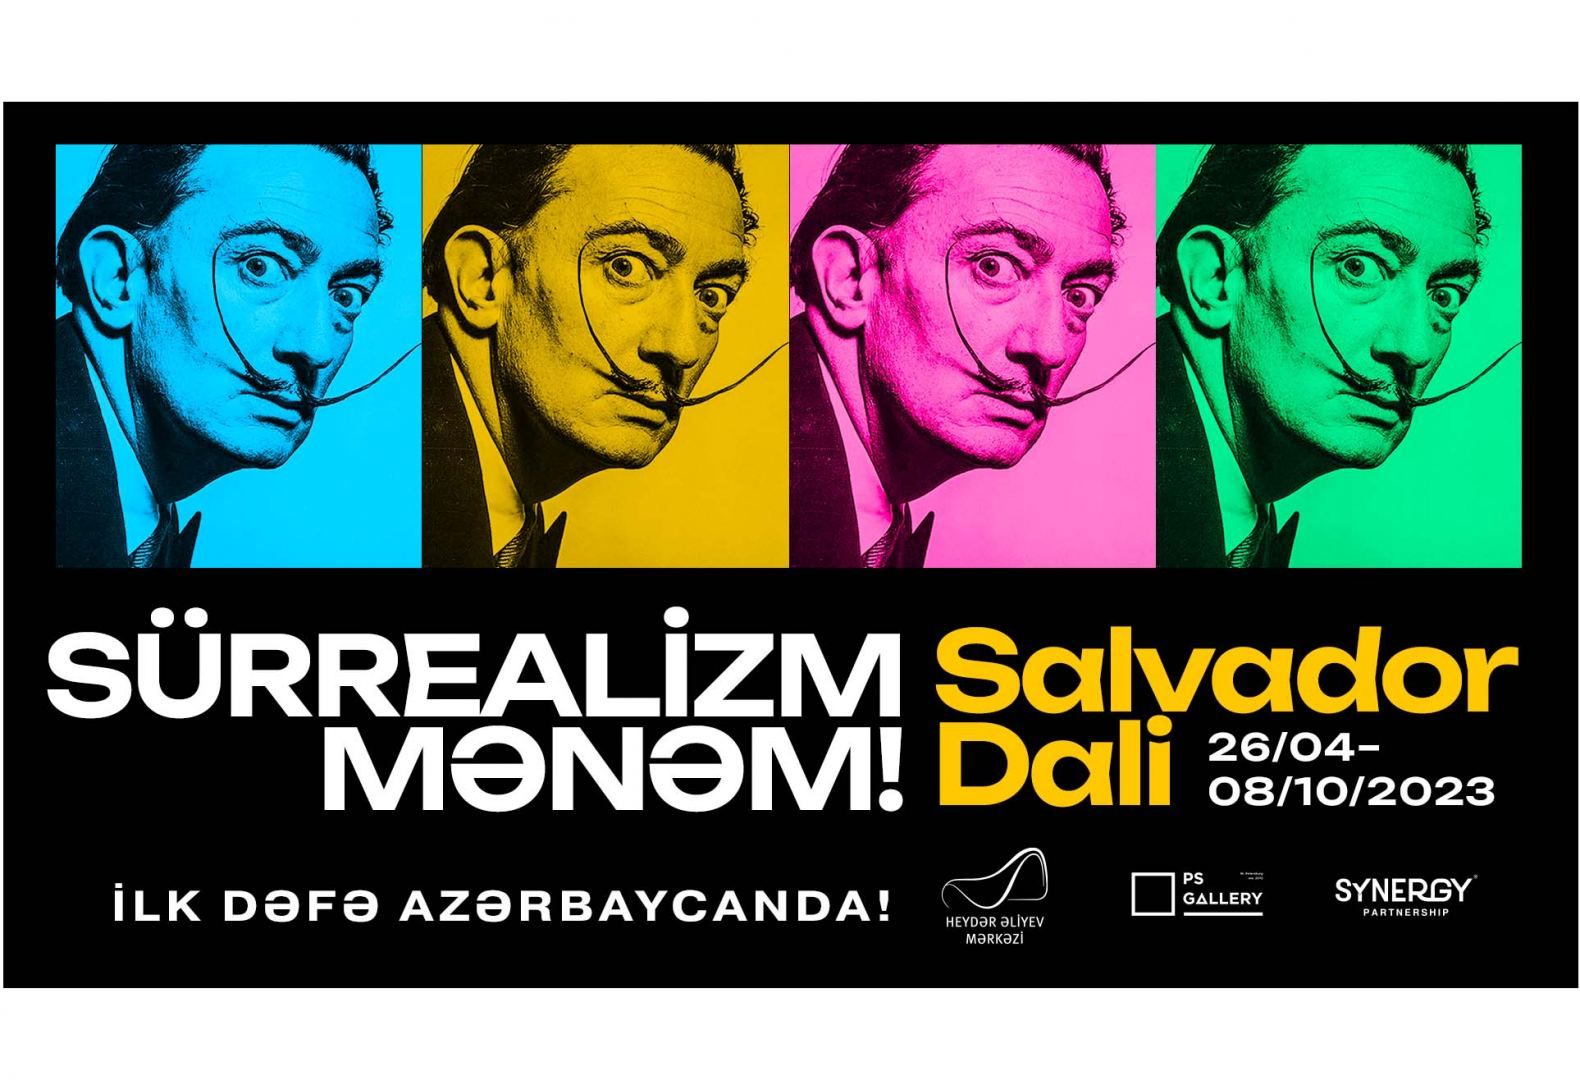 Two days left until Salvador Dali's exhibition in Baku [VIDEO]